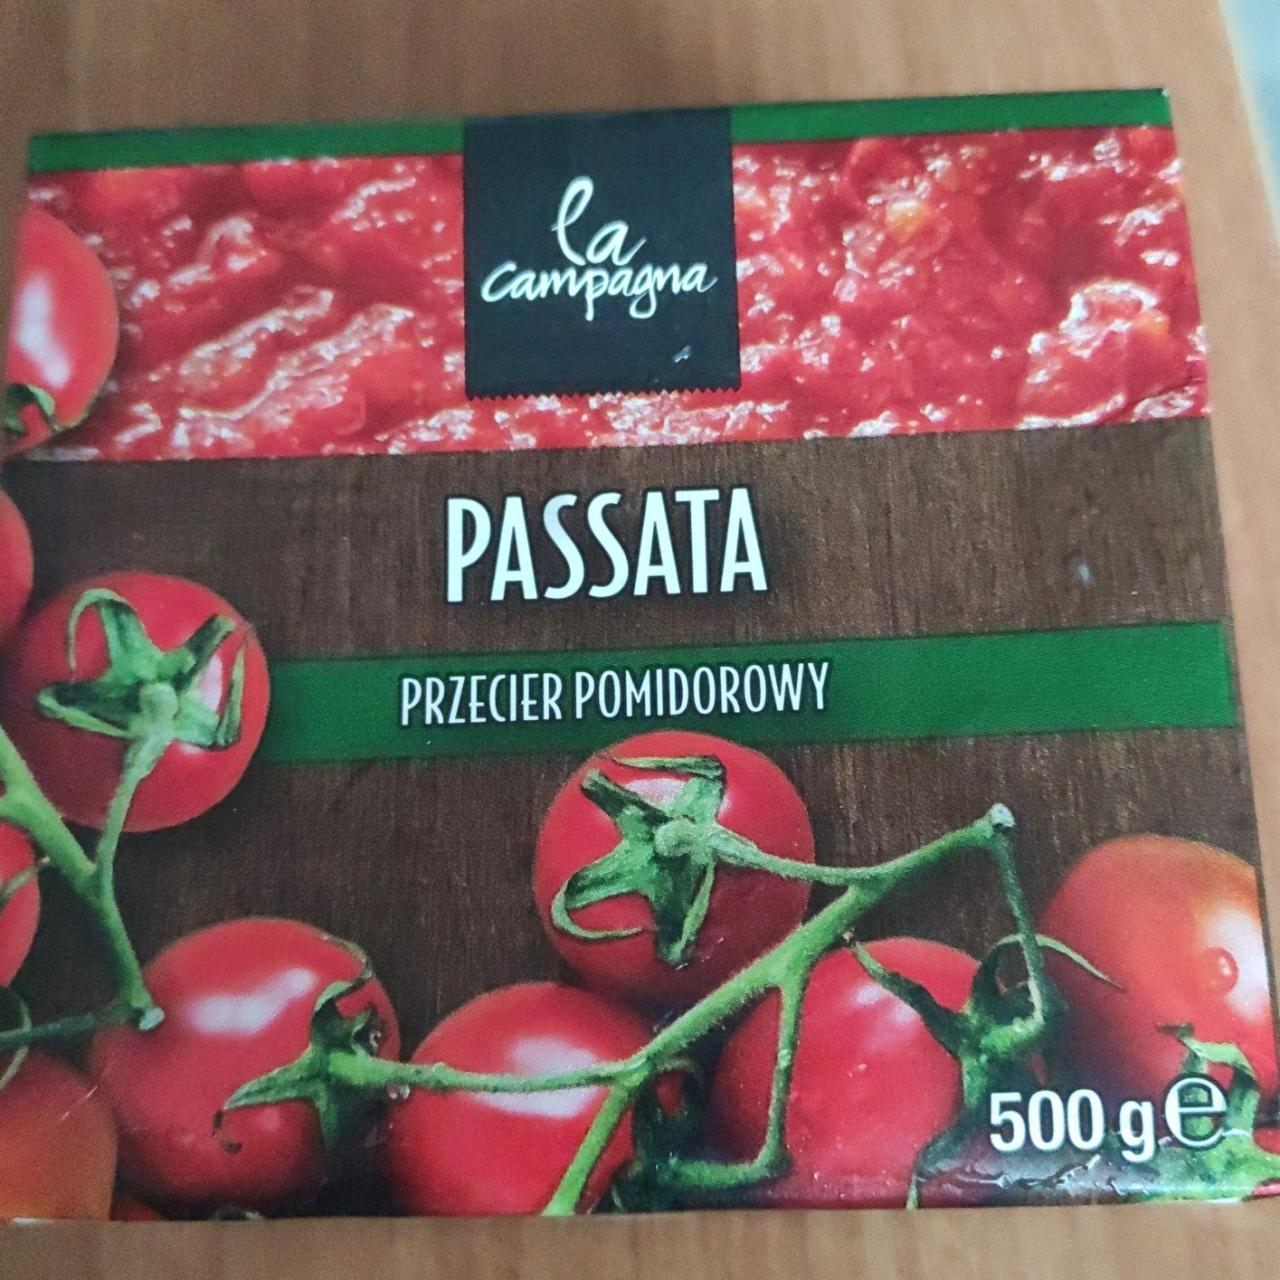 Фото - Томатне пюре Passata Przecier Pomidorowy La Campagna